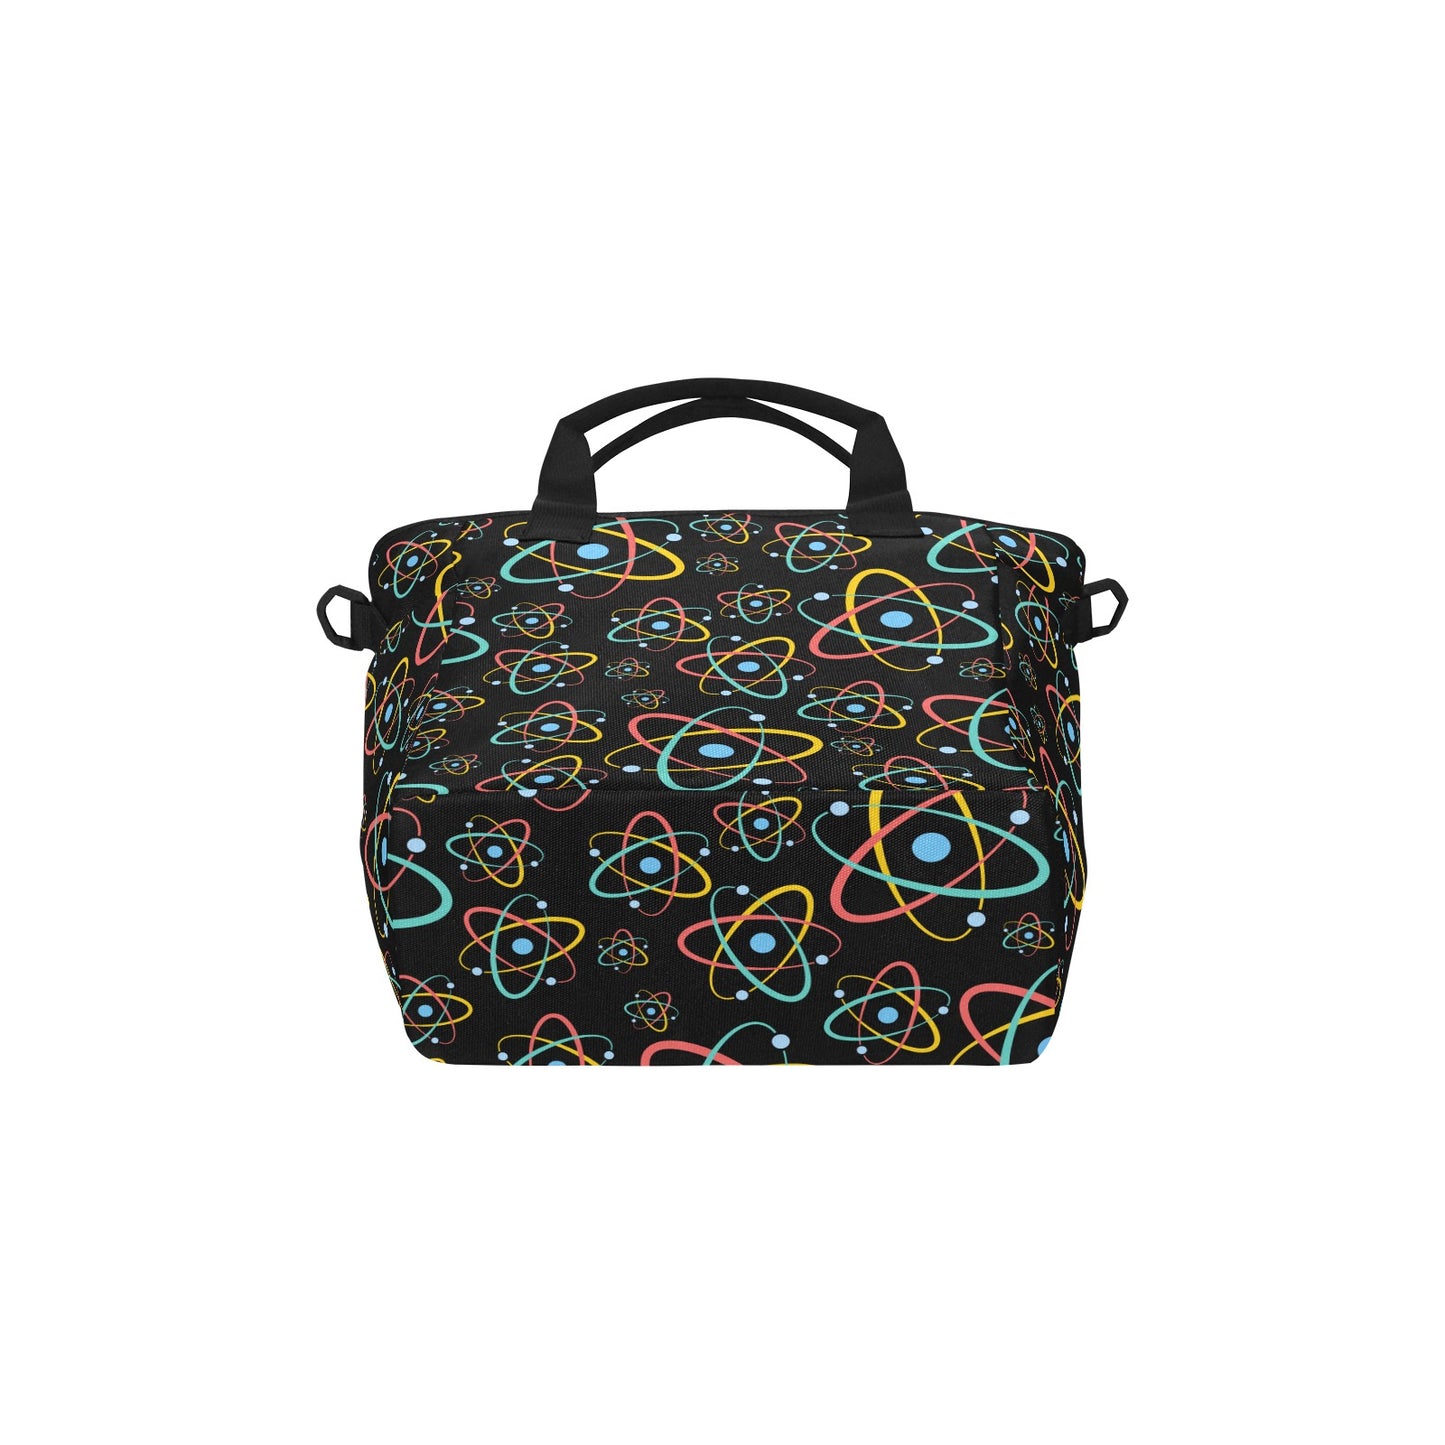 Atoms - Tote Bag with Shoulder Strap Nylon Tote Bag